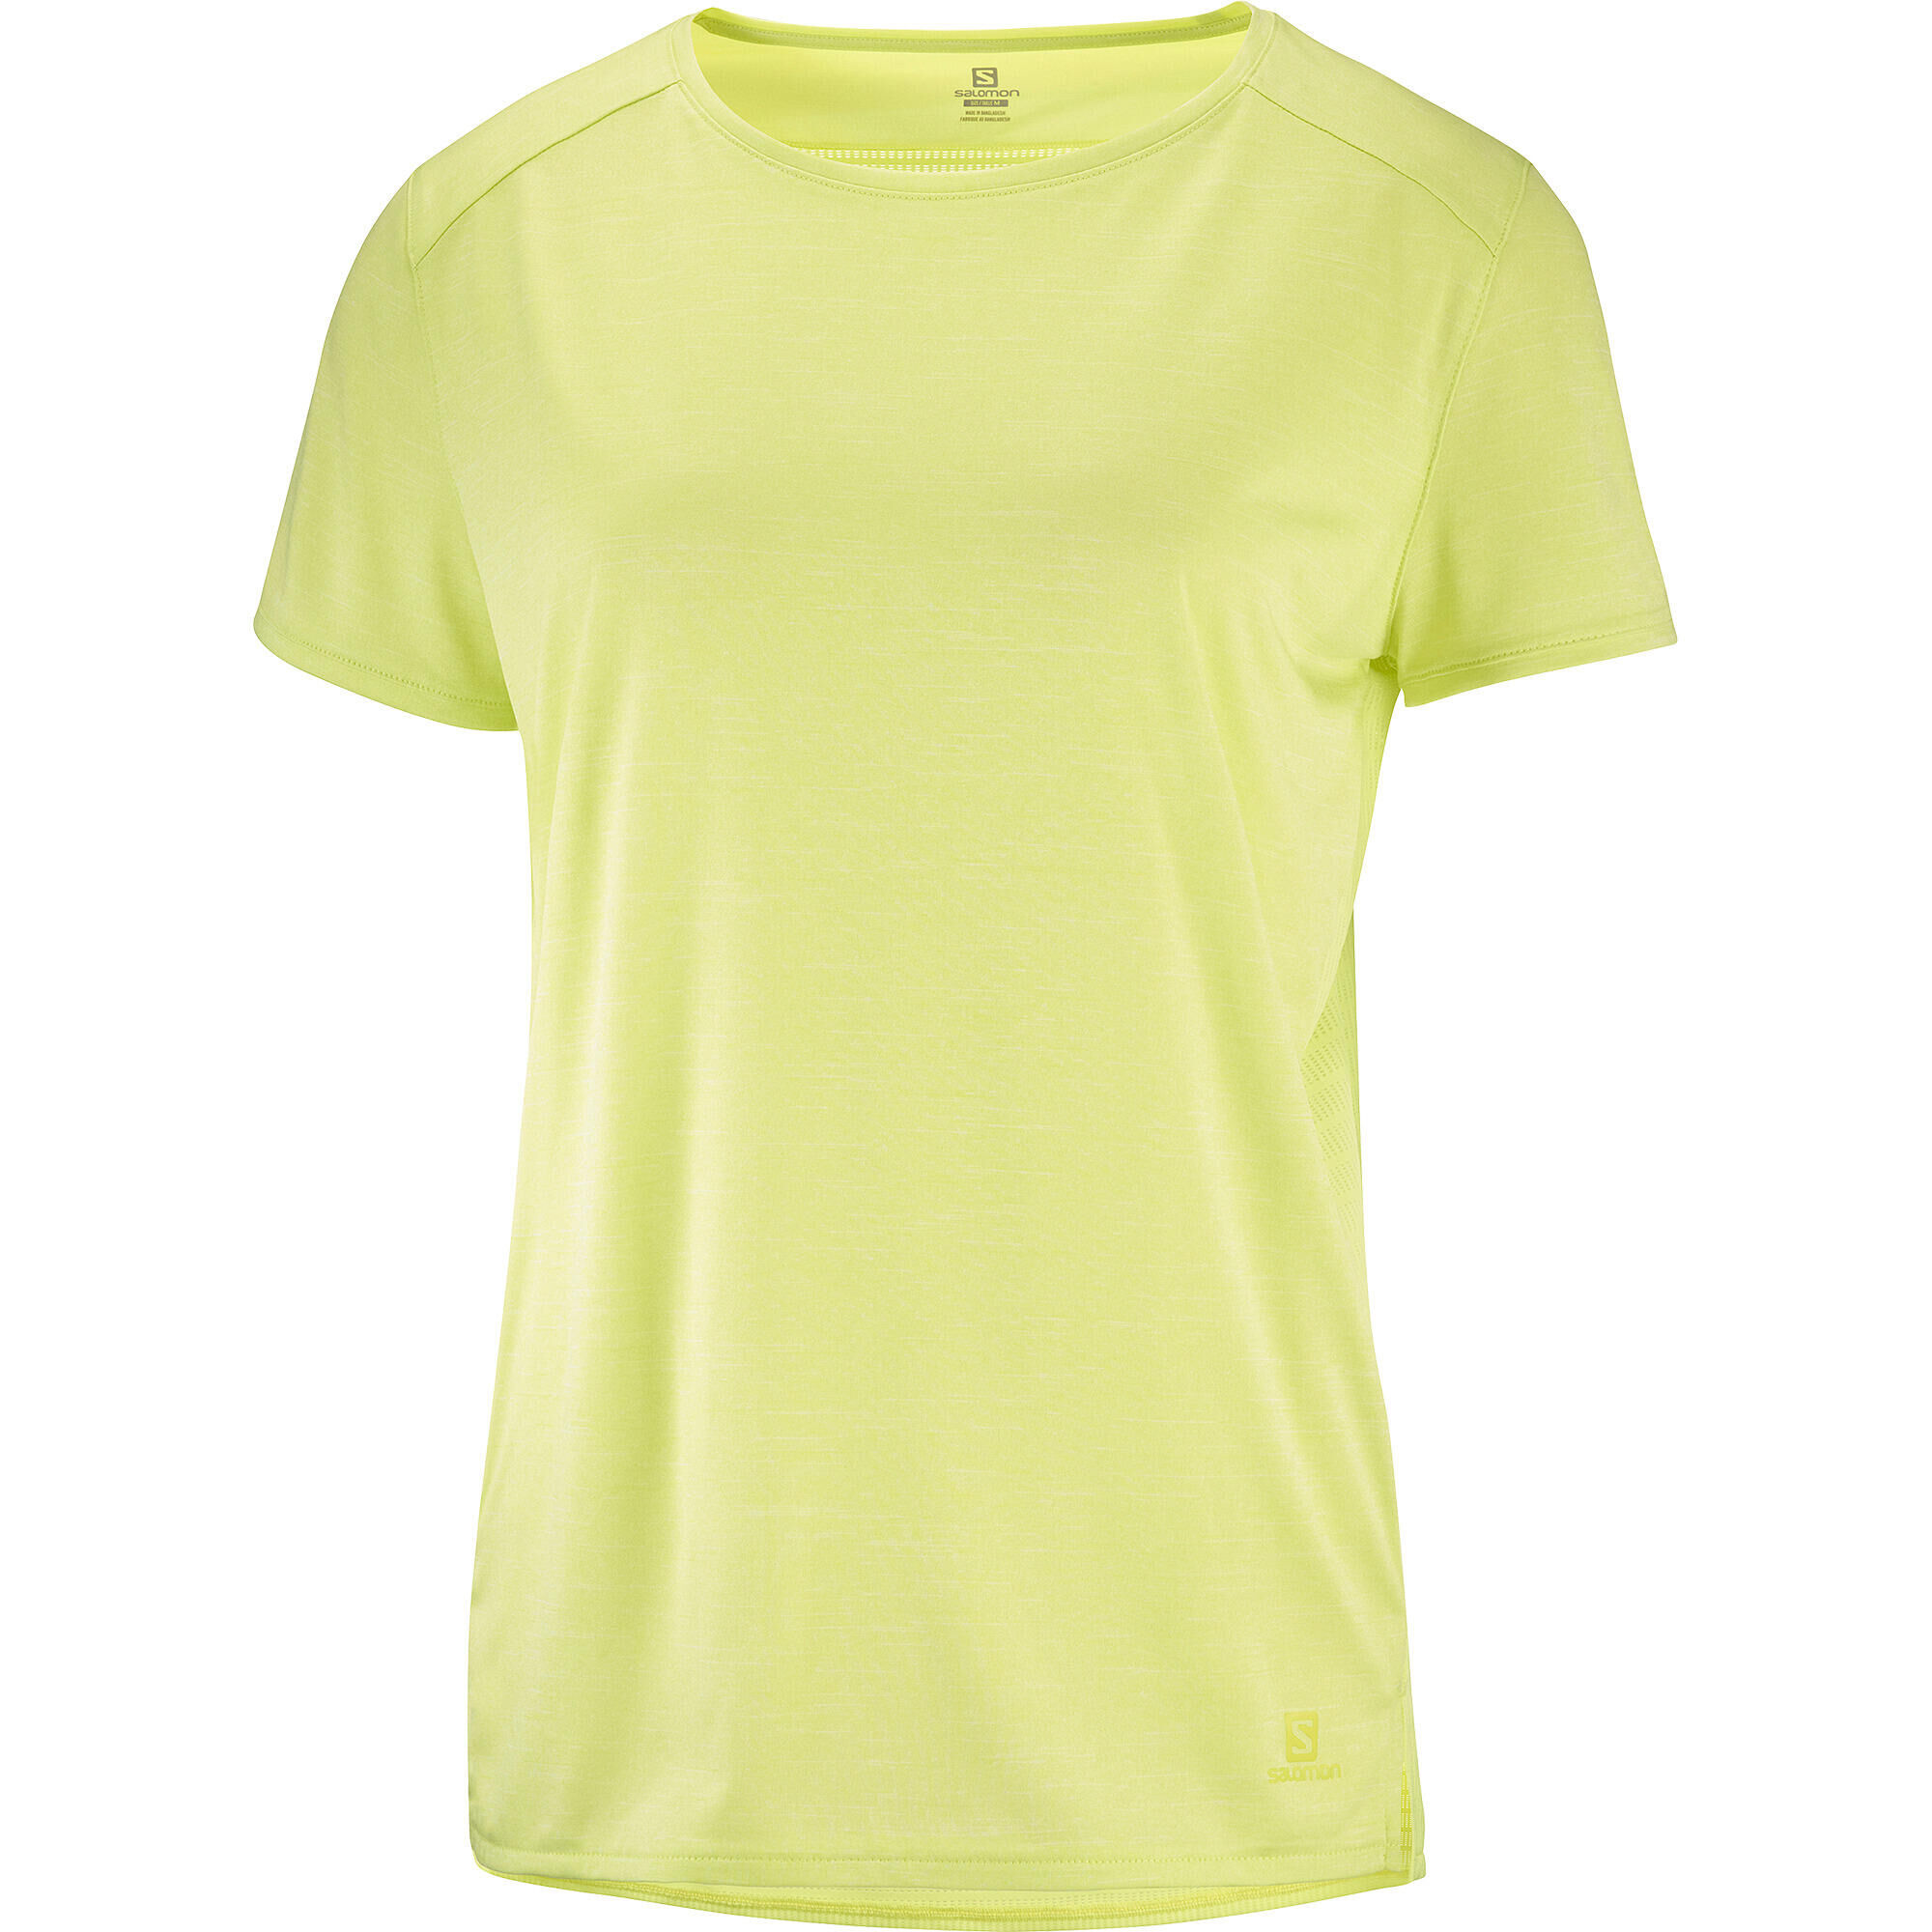 SALOMON The women’s OUTLINE SUMMER t-shirt combines comfort, lightness and moisture transfer